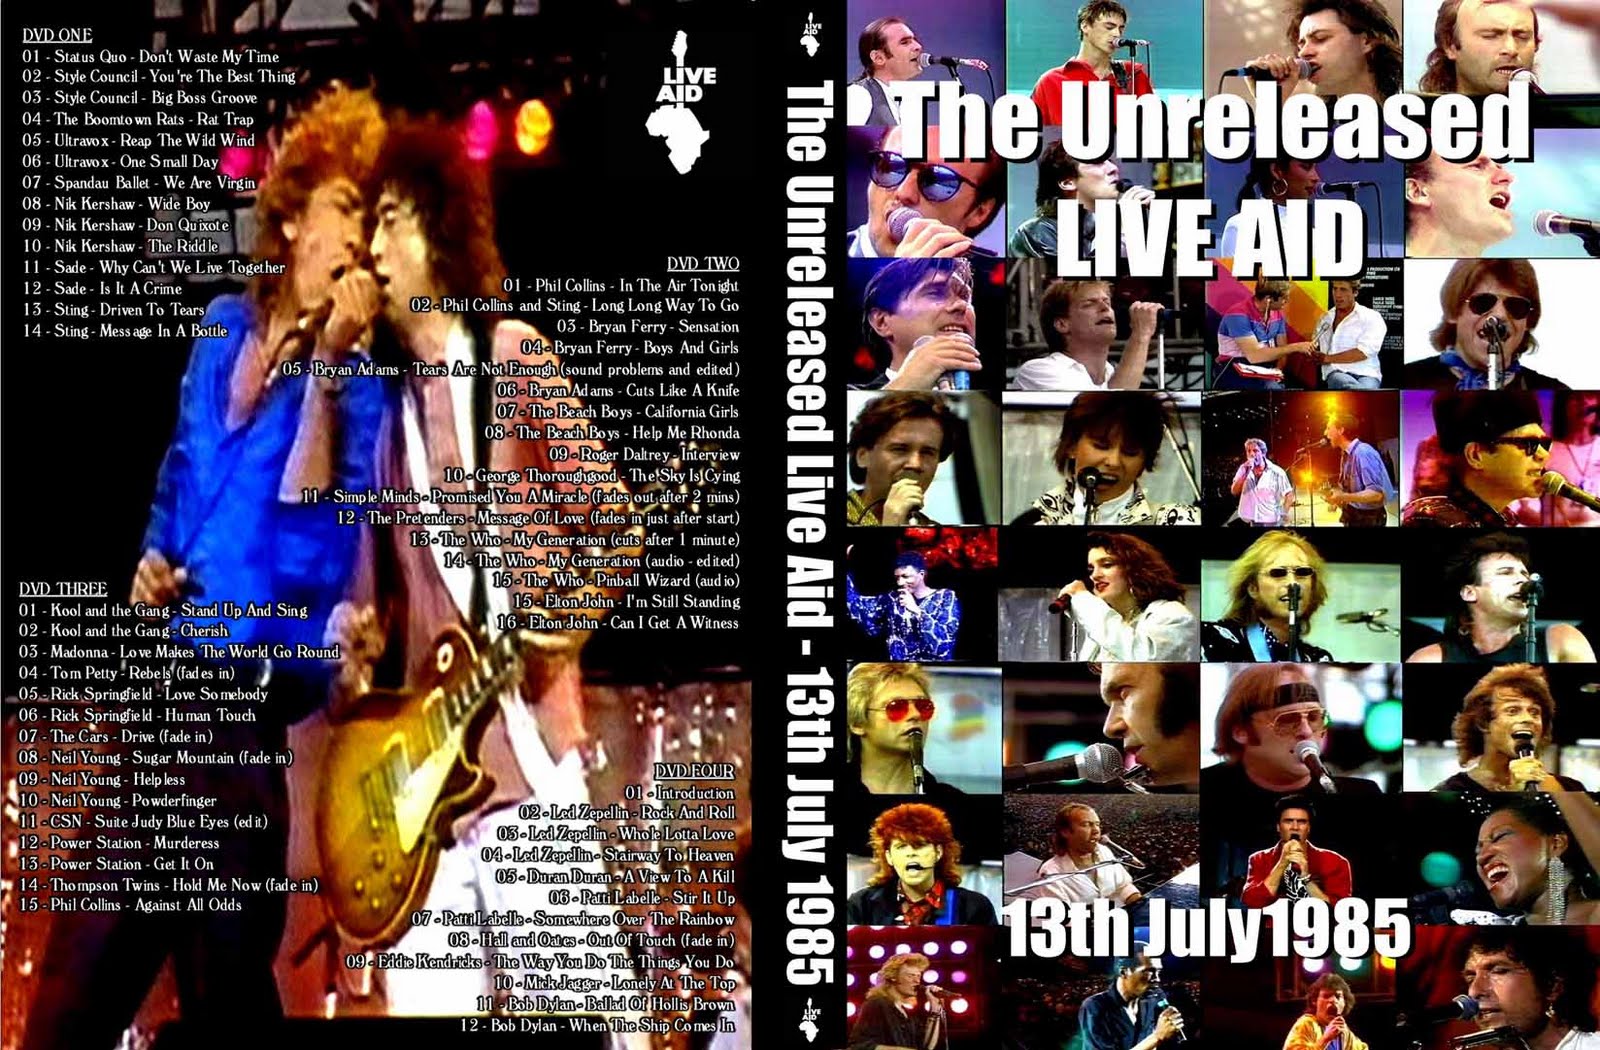 http://3.bp.blogspot.com/-5_2wRoqky-o/TieCDDhL4OI/AAAAAAAADIE/uWfCQdHKjfs/s1600/DVD+Cover+-+The+Unreleased+Live+Aid+DVD+3.jpg